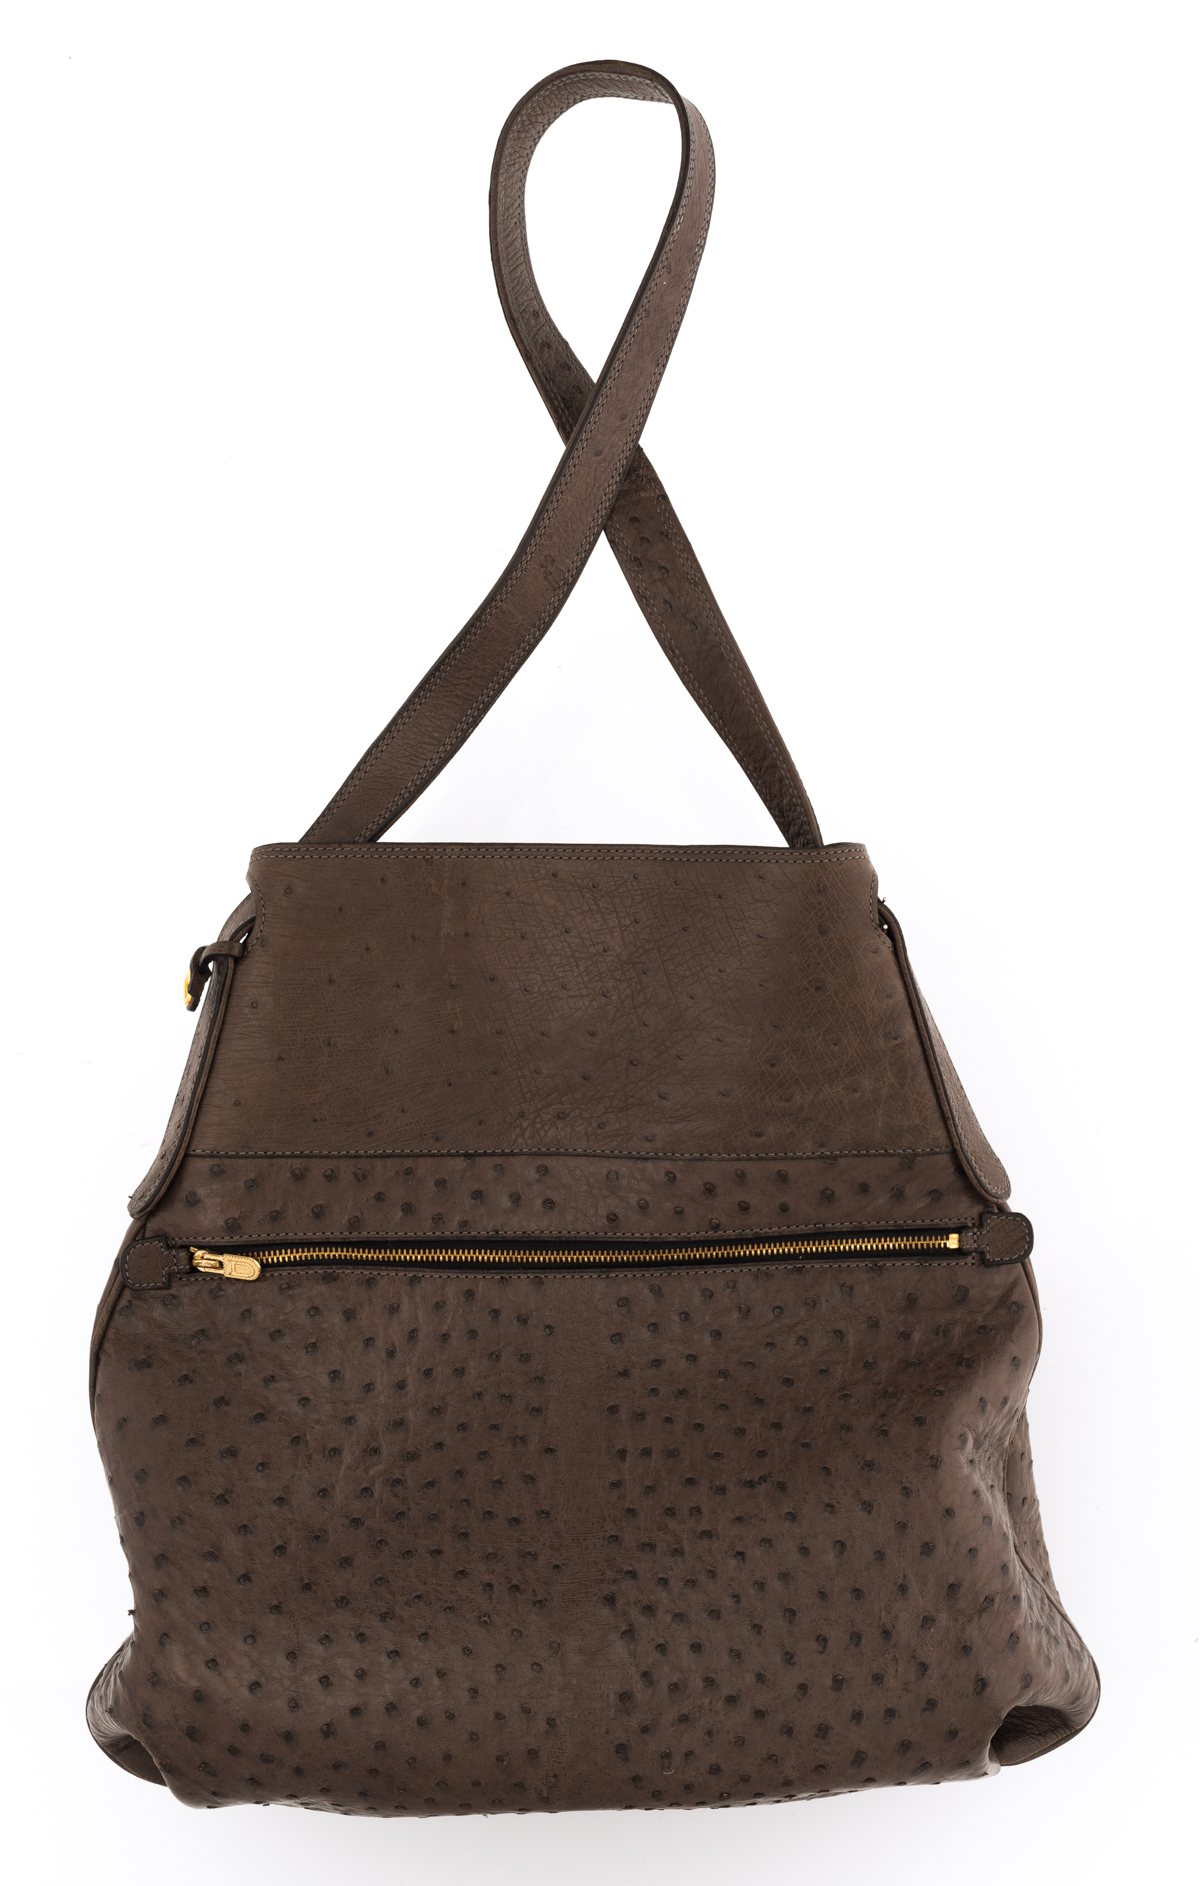 A Delvaux ostrich leader handbag, H 34 cm - Image 2 of 4